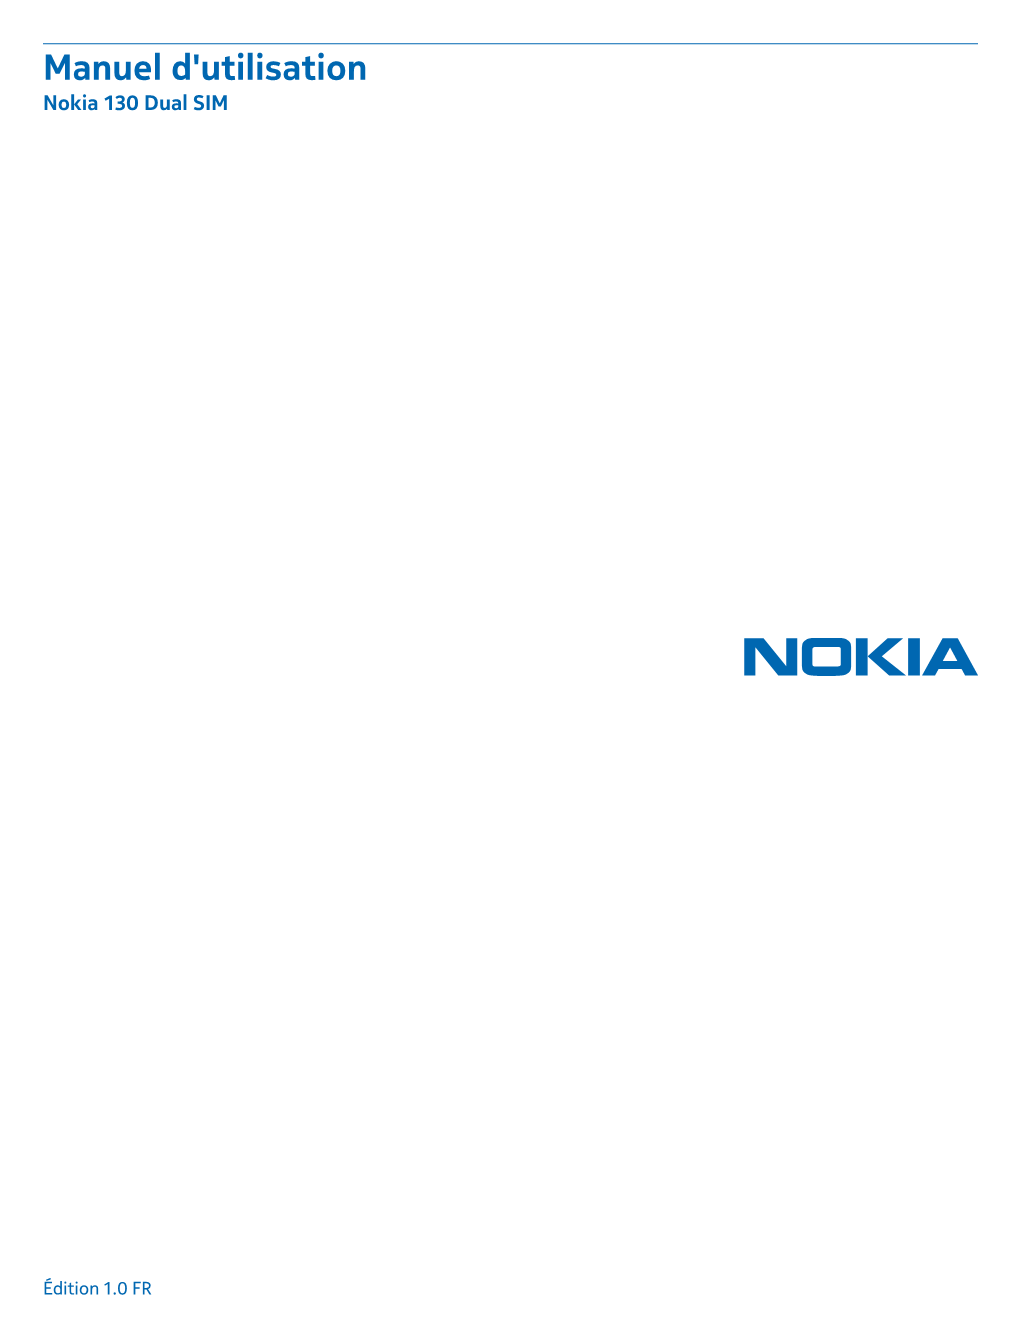 Manuel D'utilisation Nokia 130 Dual SIM